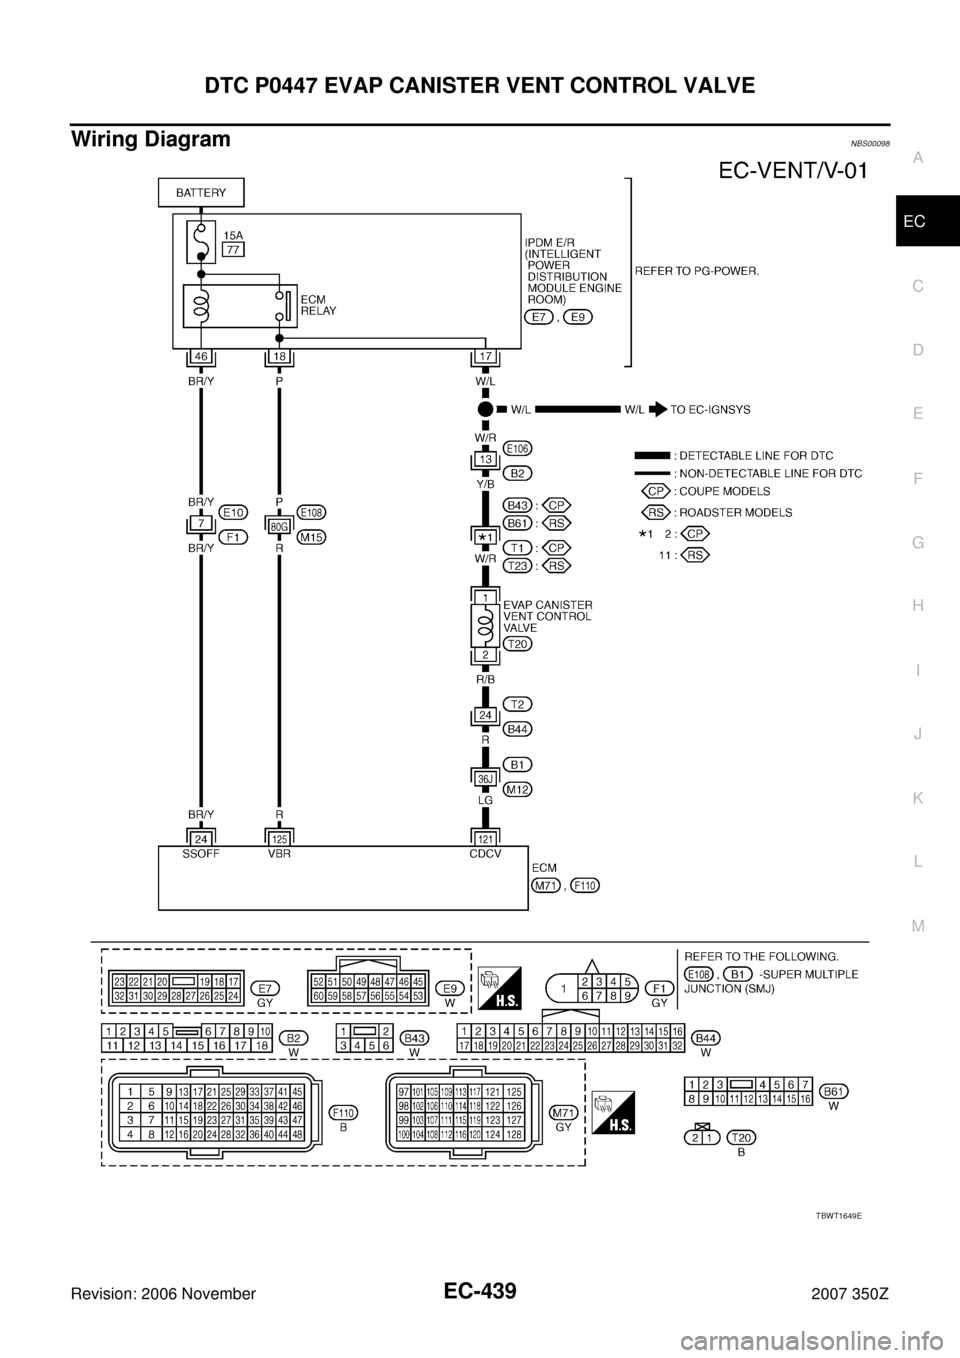 NISSAN 350Z 2007 Z33 Engine Control Workshop Manual DTC P0447 EVAP CANISTER VENT CONTROL VALVE
EC-439
C
D
E
F
G
H
I
J
K
L
MA
EC
Revision: 2006 November2007 350Z
Wiring DiagramNBS00098
TBWT1649E 